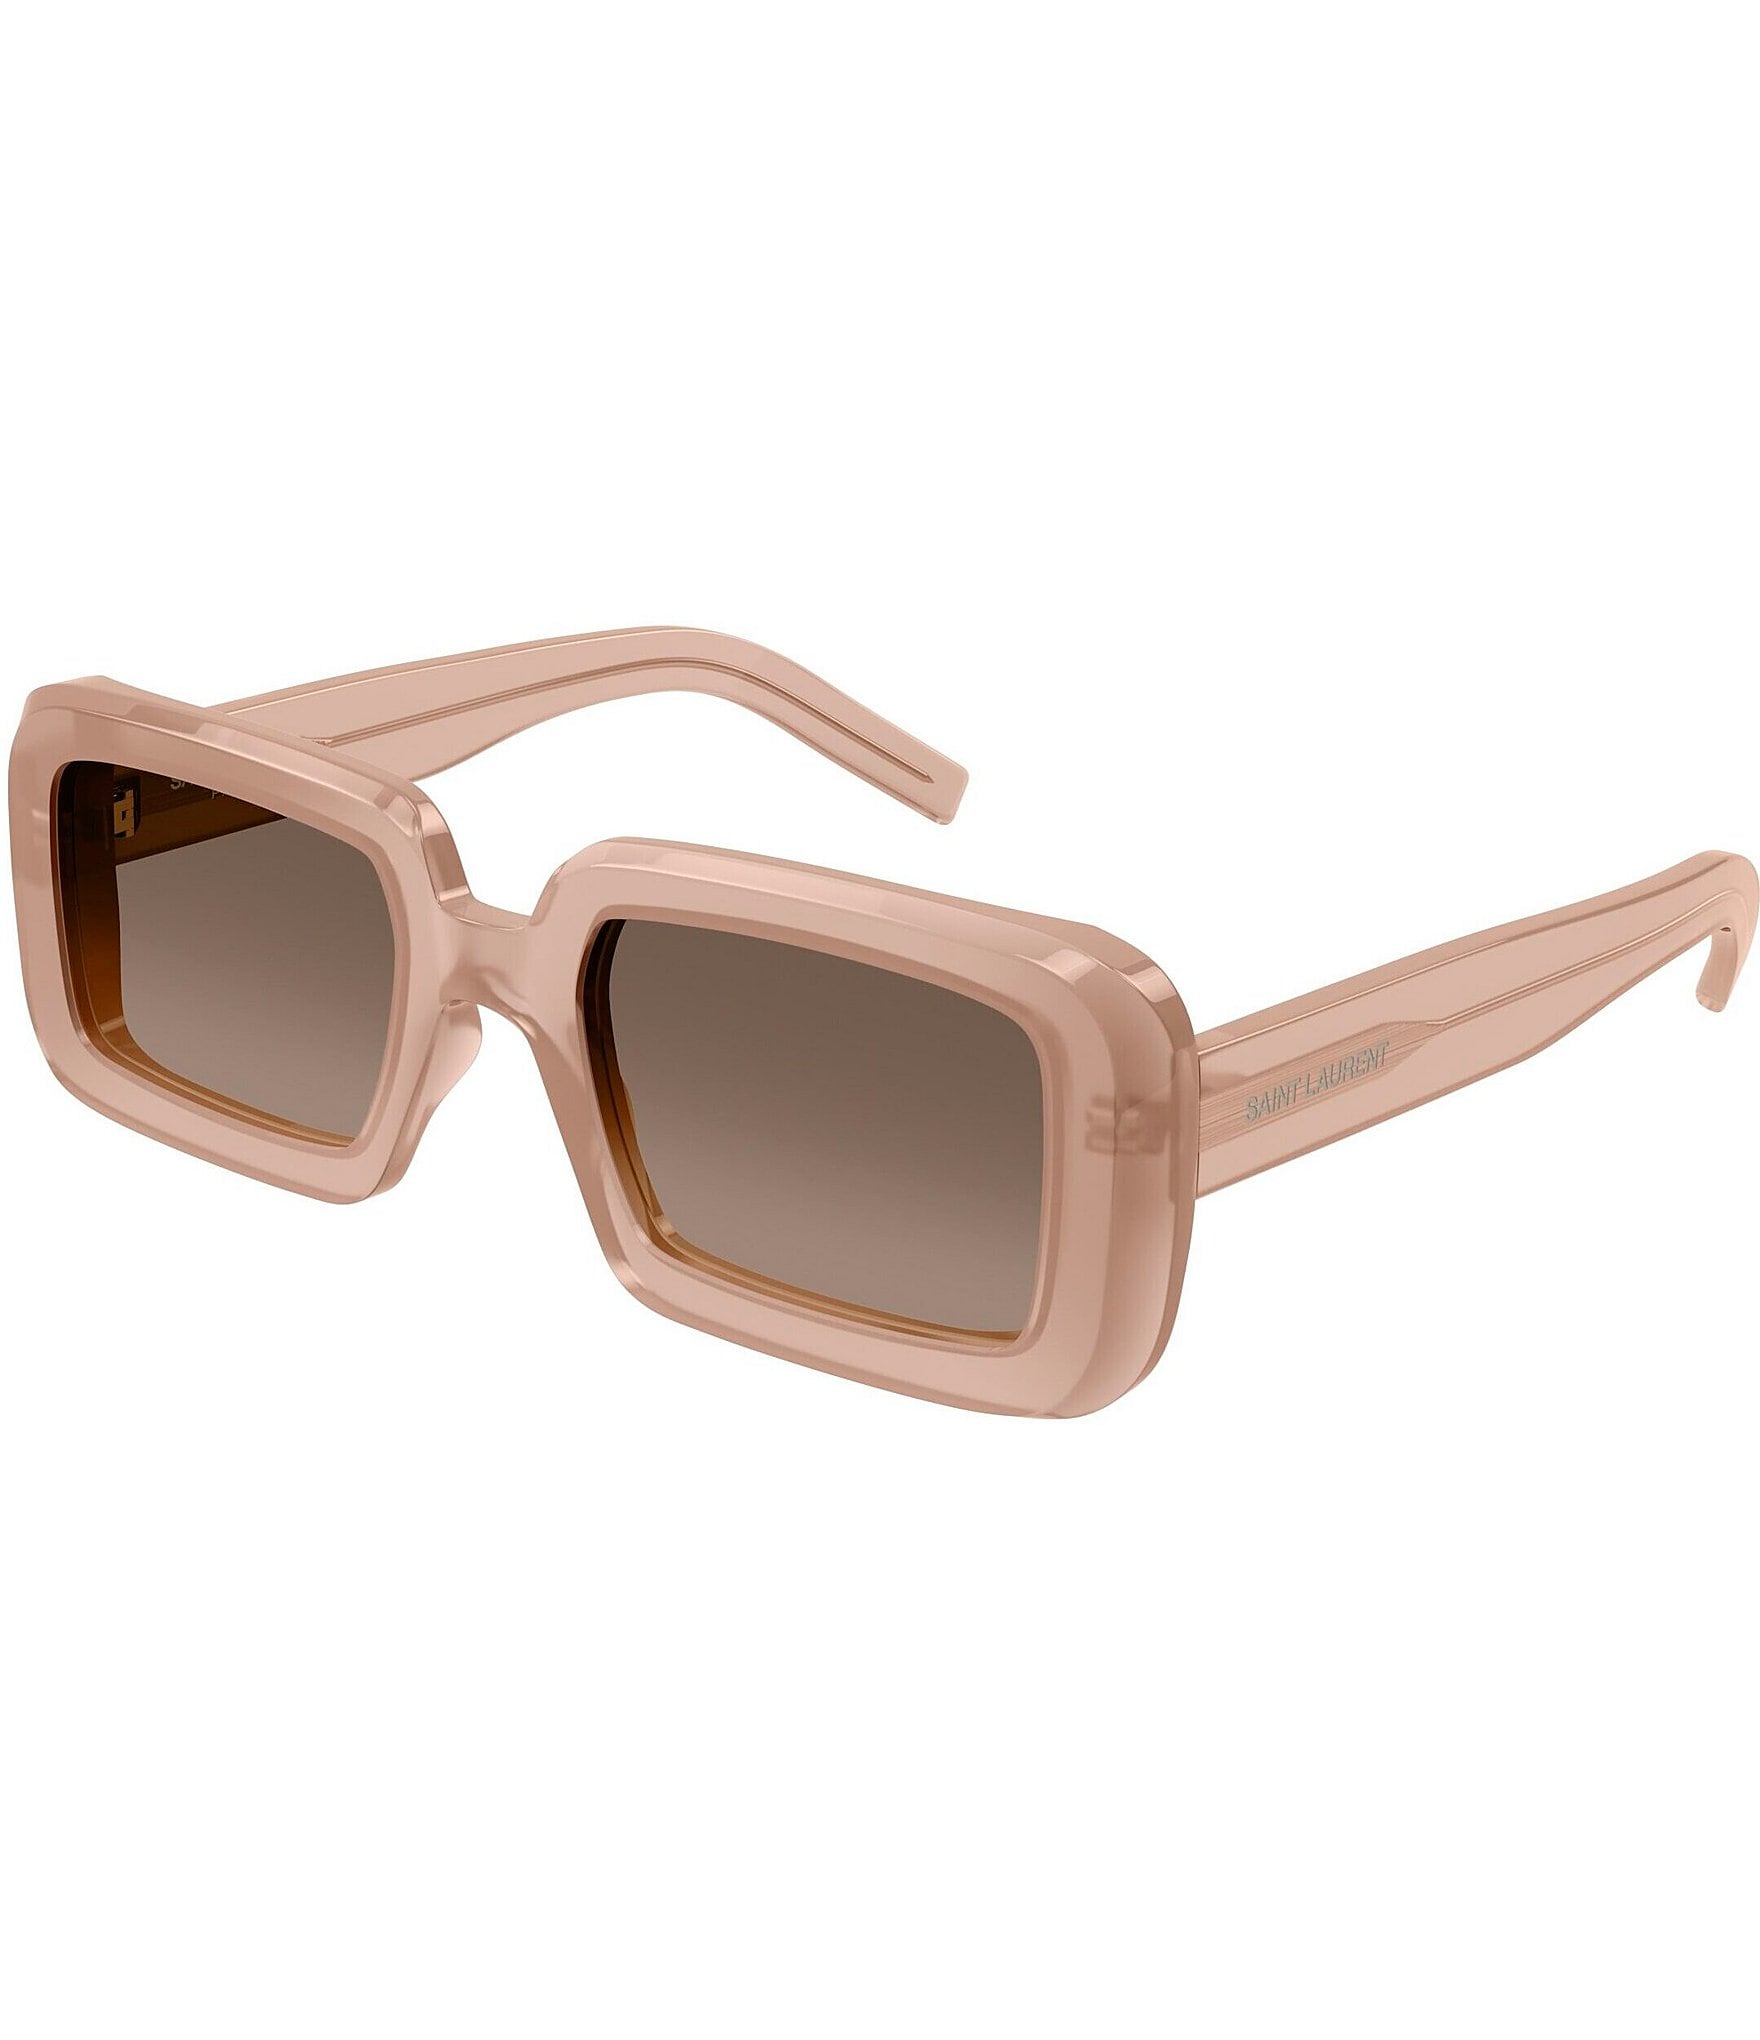 Saint Laurent Women's New Wave 52mm Rectangle Sunglasses | Dillard's